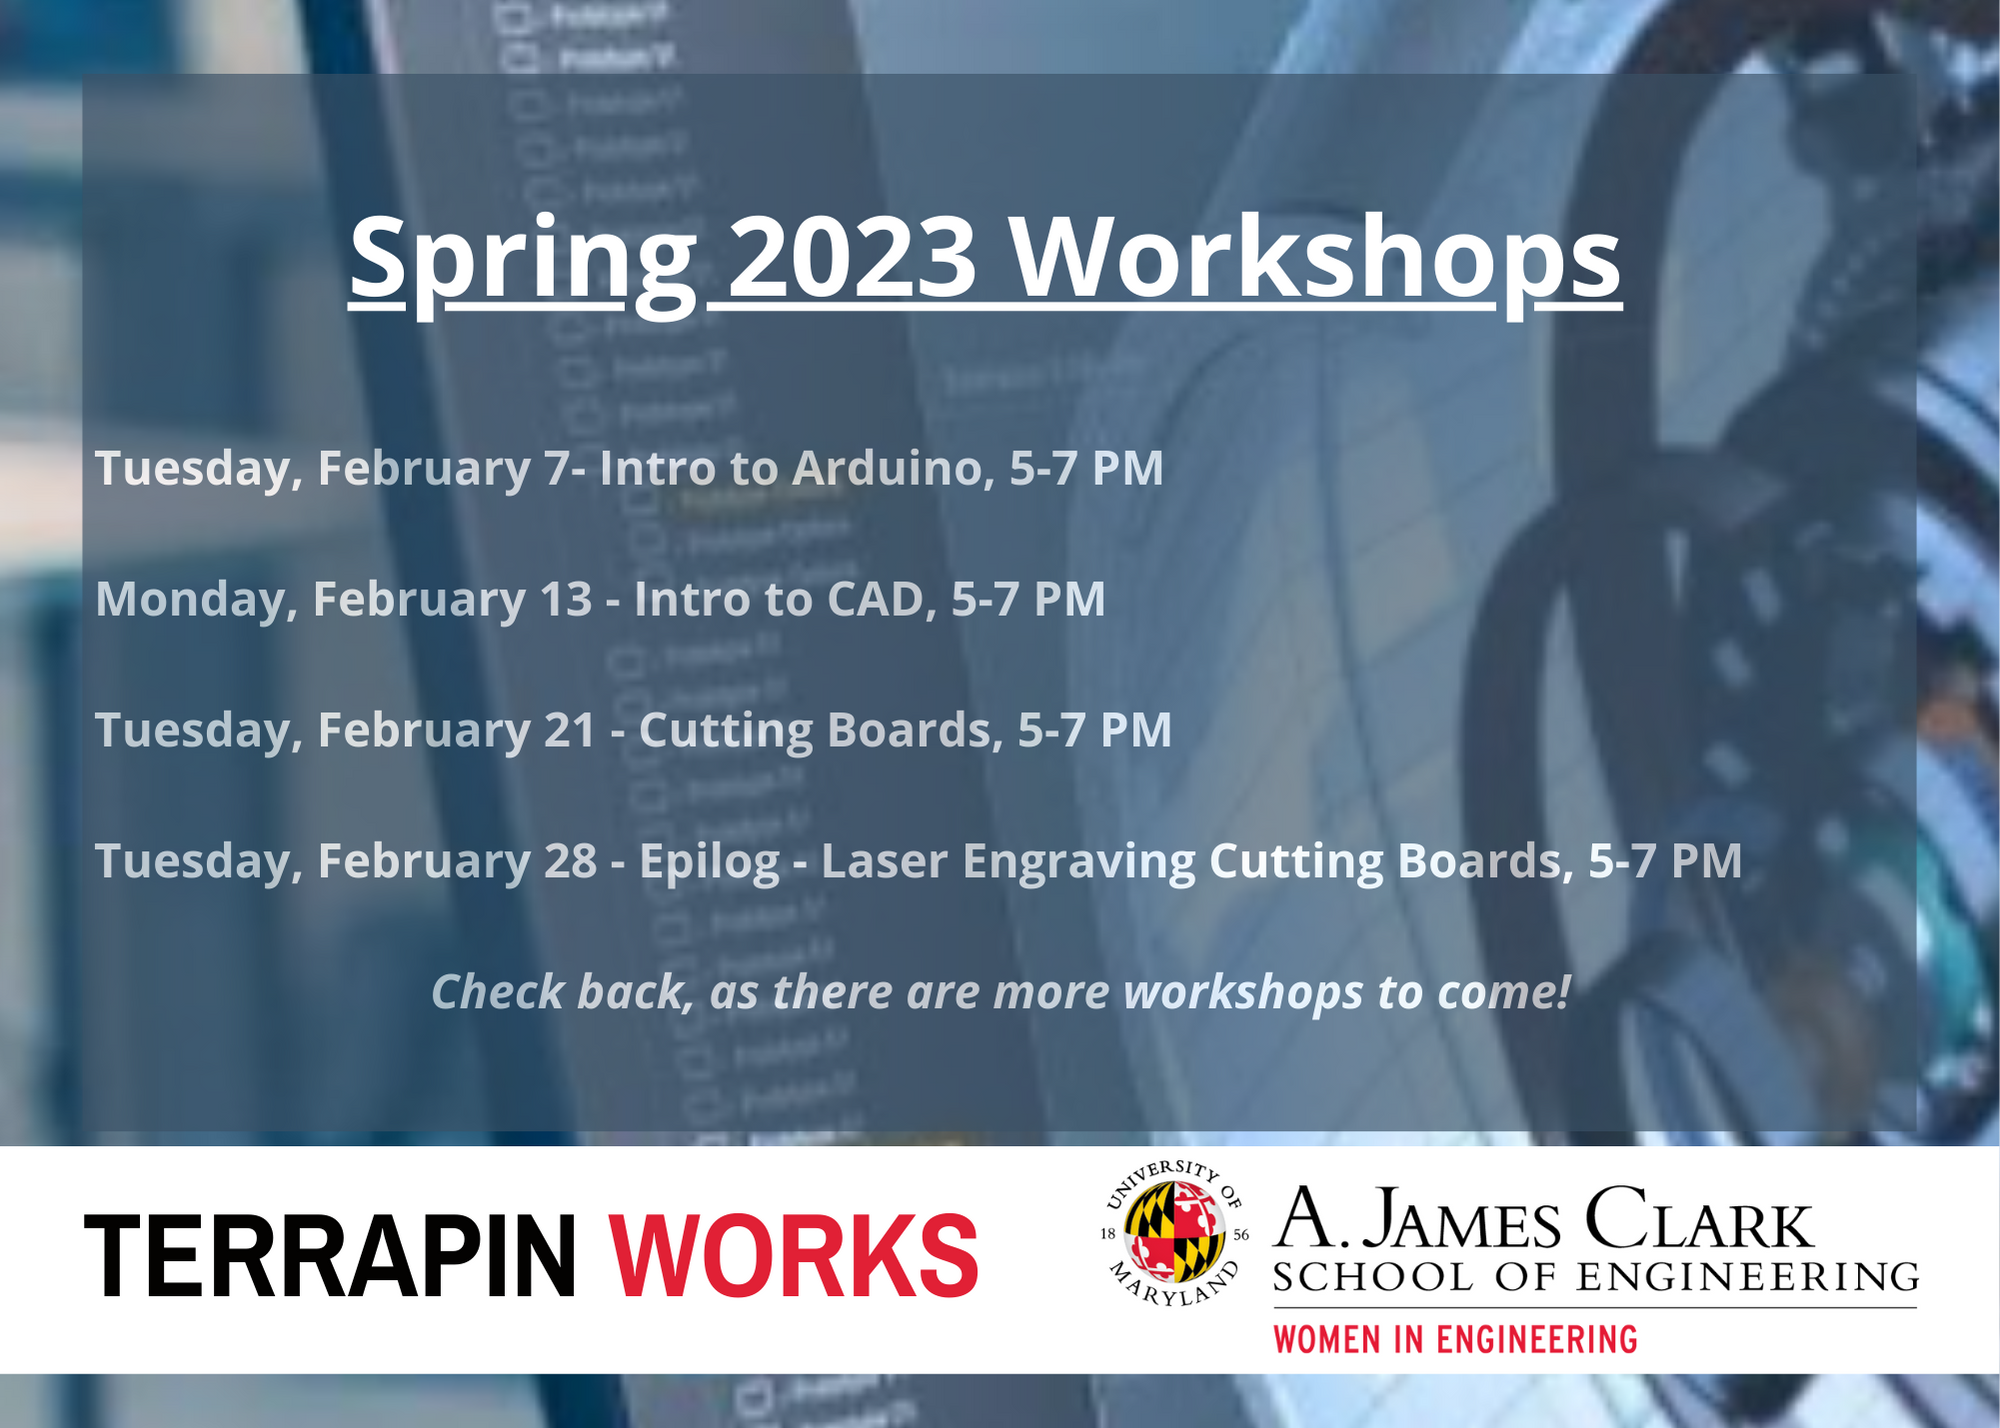 Terrapin Works Spring 2023 Schedule